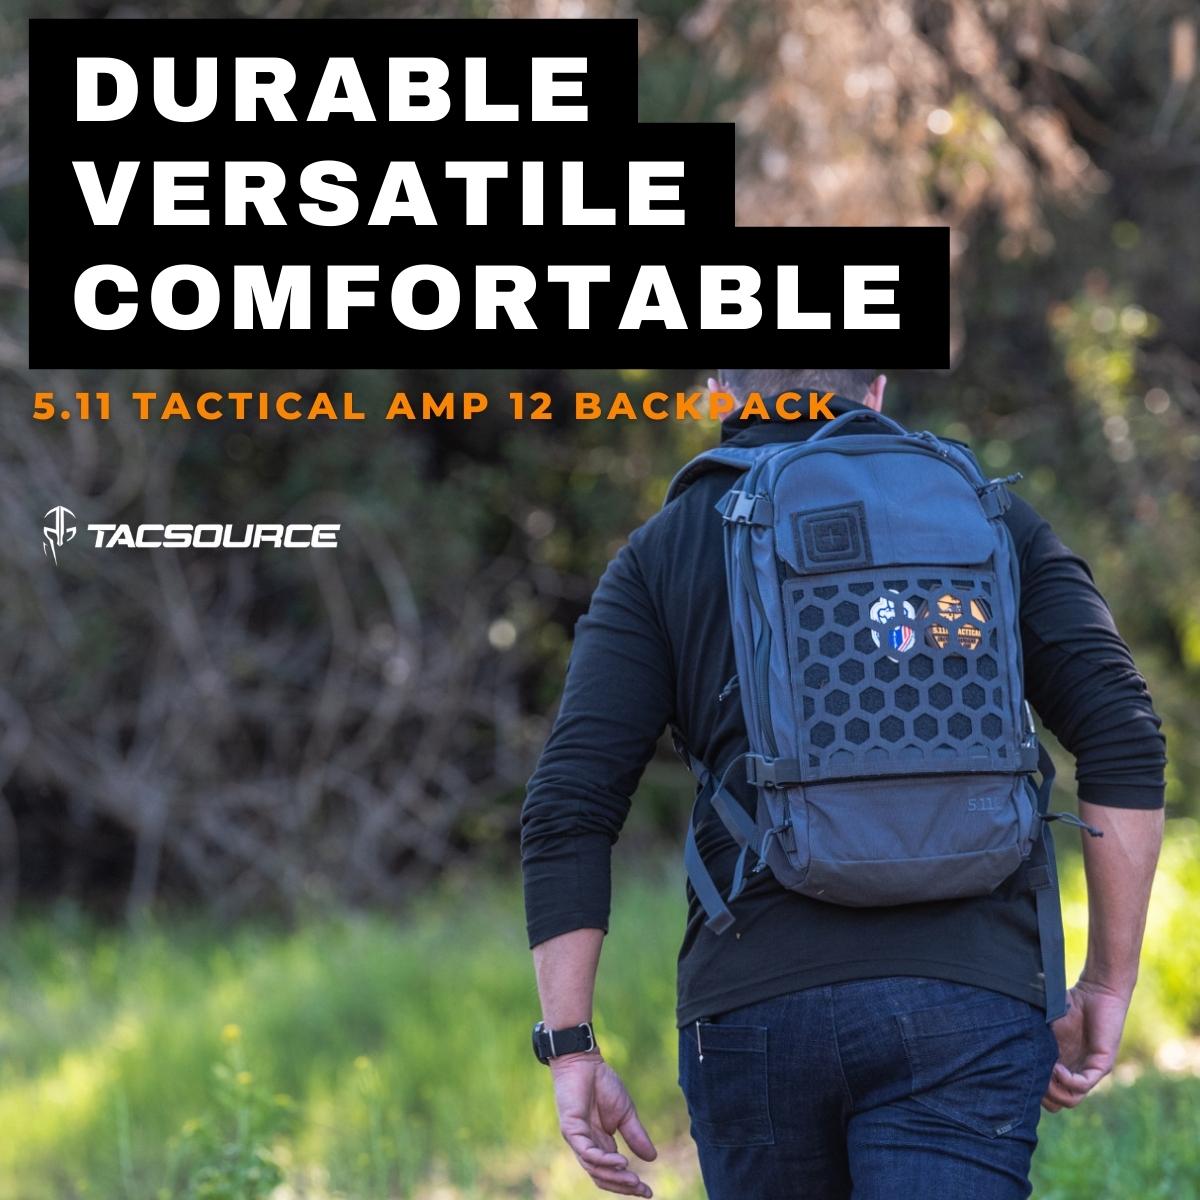 Durable, Versatile & Comfortable: 5.11 Tactical AMP 12 Backpack